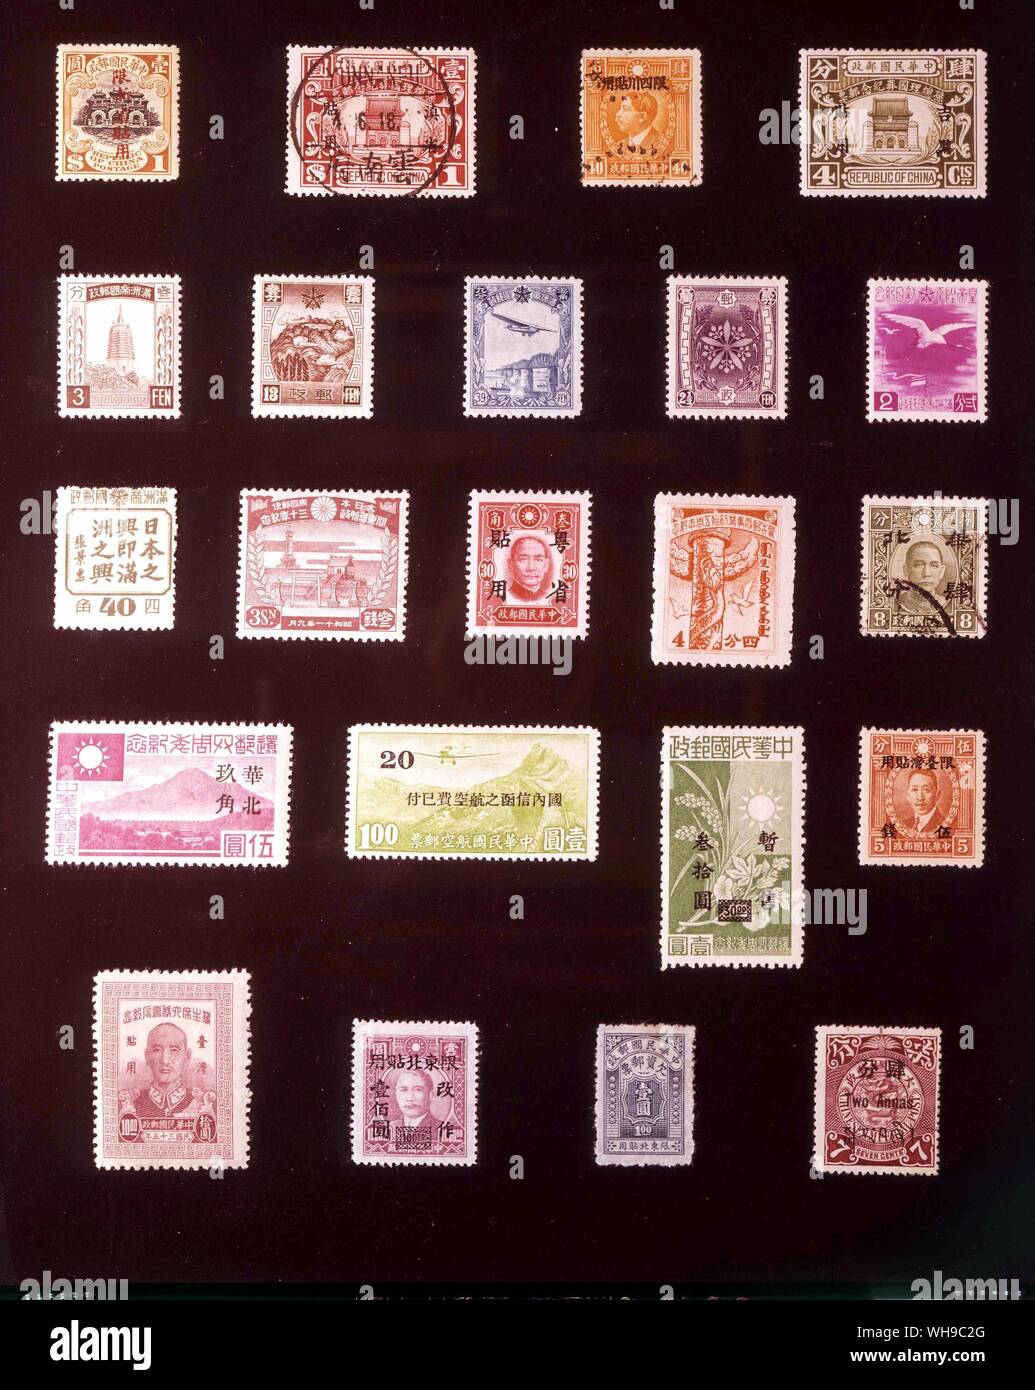 ASIA - CHINESE PROVINCES: (left to right) 1. Sinkiang, 1 dollar, 1915, 2. Yunnan, 1 dollar, 1929, 3. Szechwan, 40 cents, 1933, 4. Kirin and Heilungchang, 4 cents, 1929, 5. Manchukuo, 3 fen, 1934, 6. Manchukuo, 13 fen, 1937, 7. Manchukuo, 39 fen, 1937, 8. Manchukuo, 2.5 fen, 1937, 9. Manchukuo, 2 fen, 1940, 10. Manchukuo, 40 fen, 1944, 11. Kwangtung, 3 sen, 1936, 12. Kwangtung, 30 cents, 1942, 13. Mengkiang, 4 cents, 1943, 14. North China, 4 cents, 1942, 15. Shanghai and Nanking, 5 yuan, 1944, 16. Shanghai and Nanking, 20 sen. 1941, 17. Shanghai and Nanking, 30 yuan, 1945, 18. Formosa, 5 sen, Stock Photo